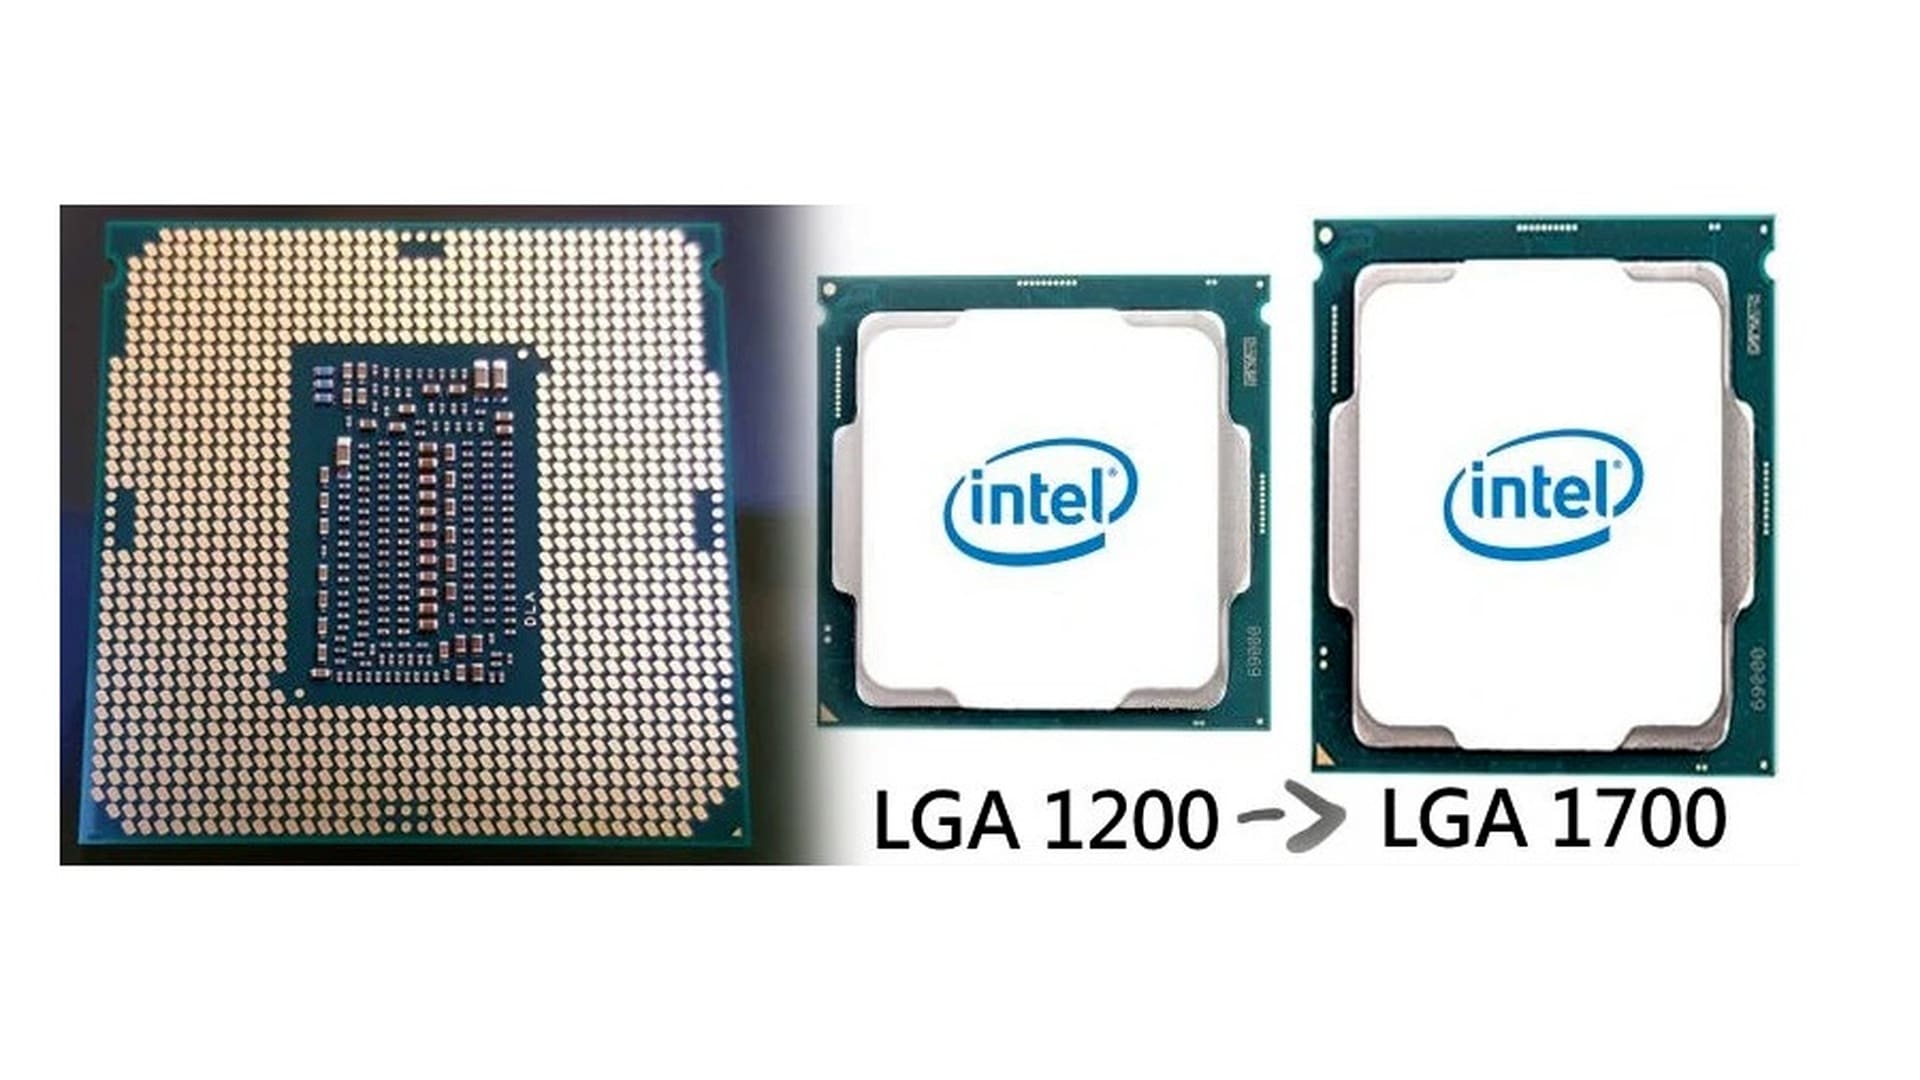 Intel i7 1700. Сокет Интел 1700. LGA 1700 процессоры Intel. LGA 1700 vs LGA 1200 процессор. Сокет Интел лга 1700.